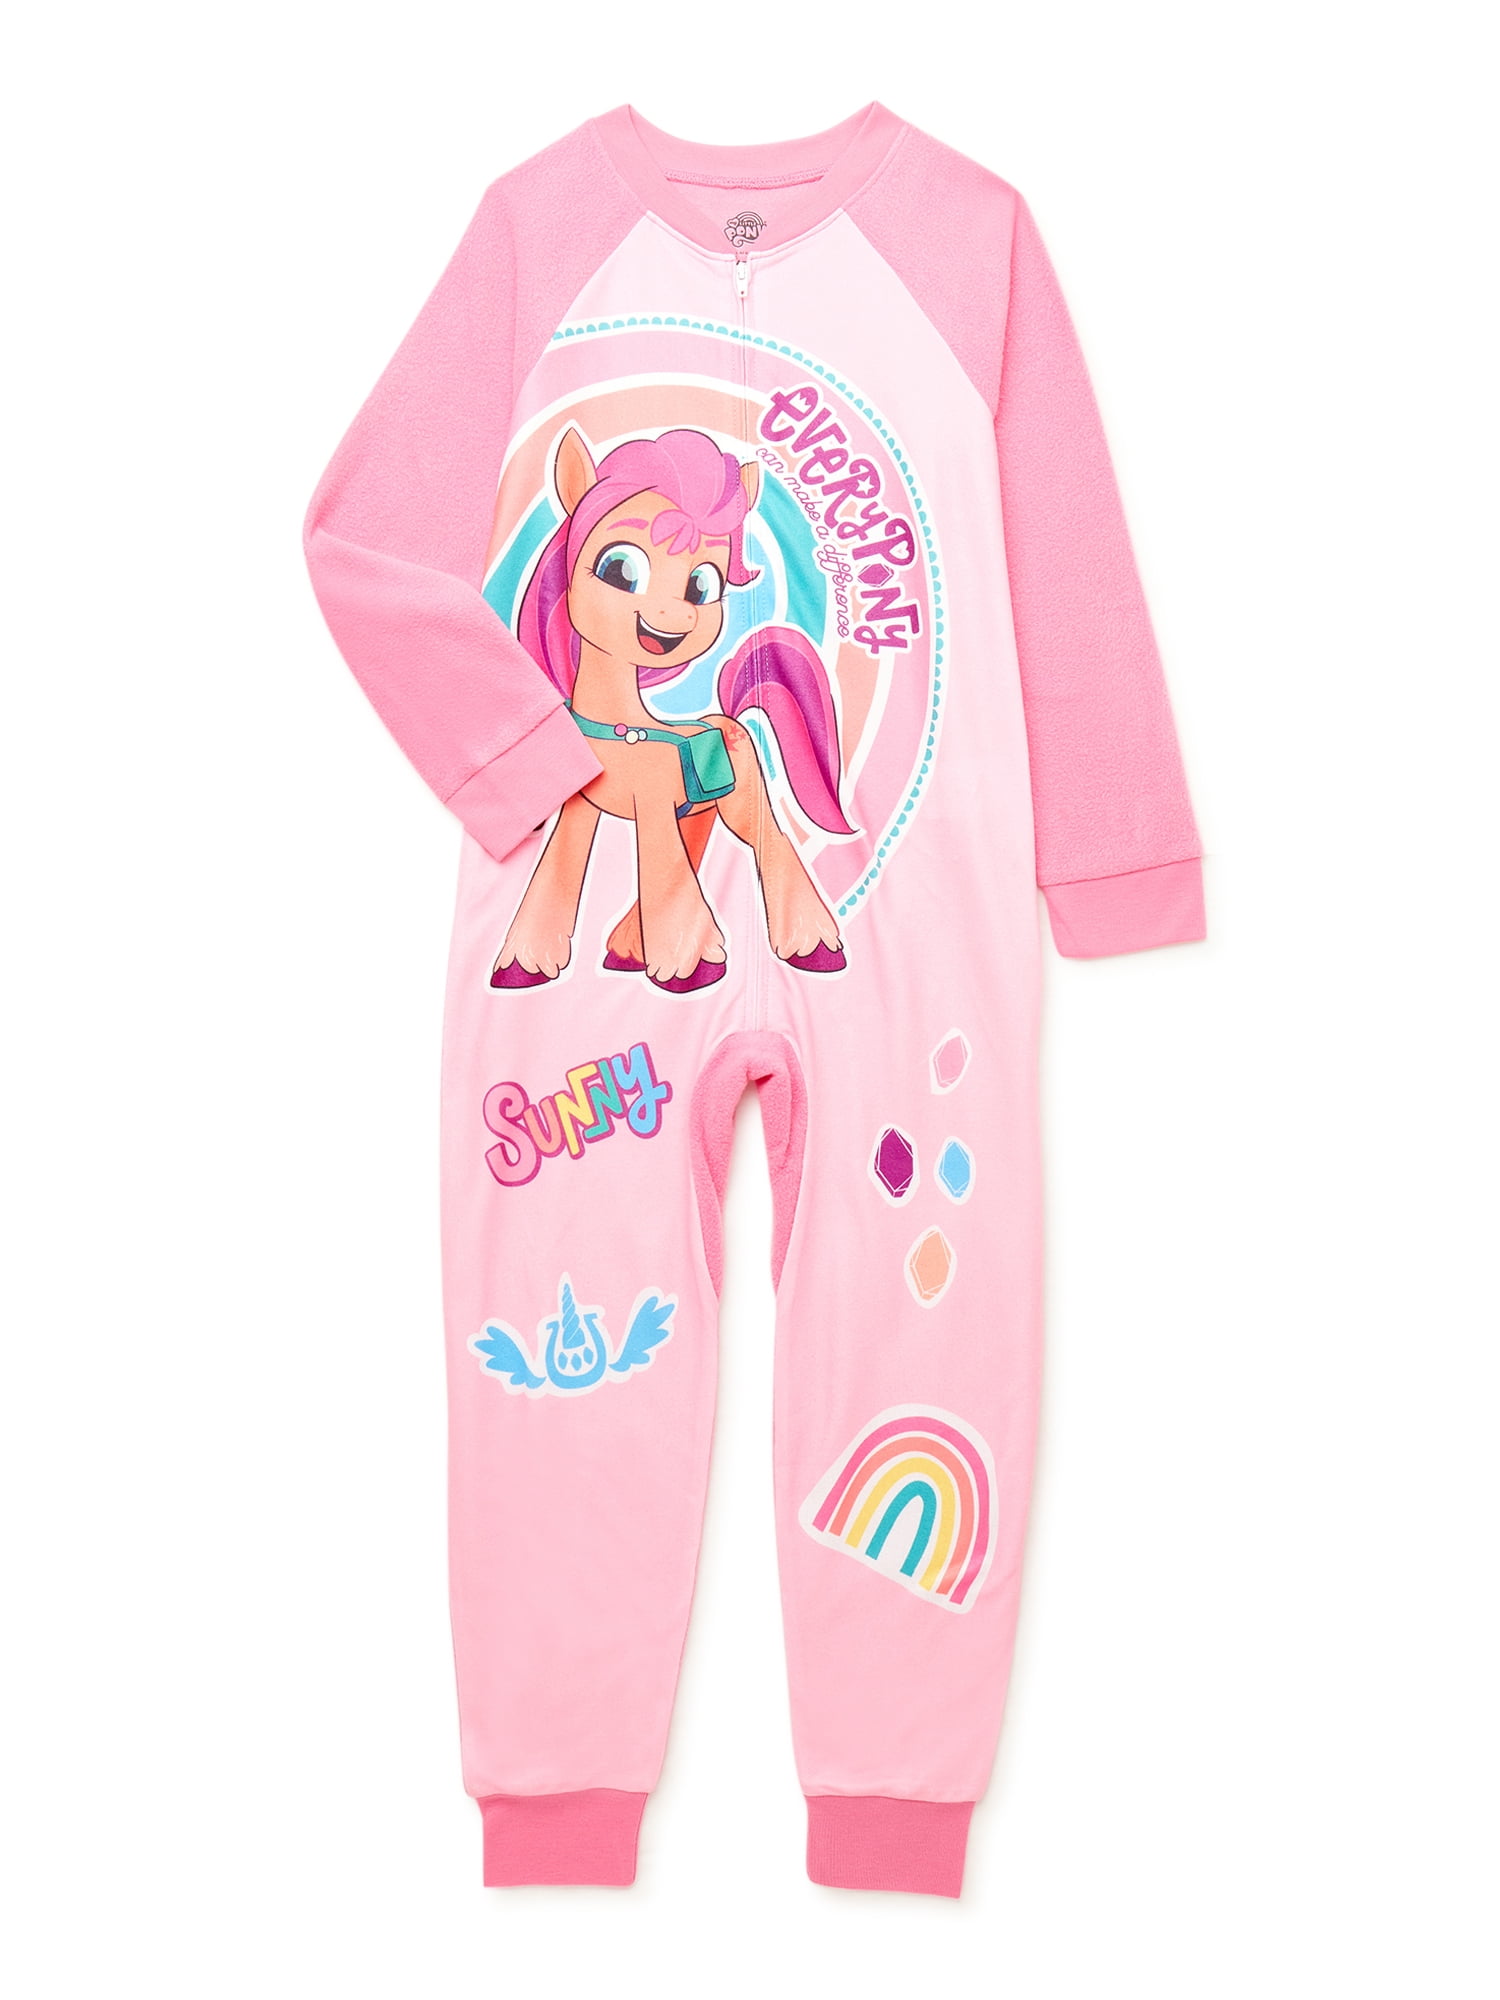 L.O.L Surprise Girls Dolls Fleece Onesie All in One Pyjamas Kids Character Sleepsuit Onezee 